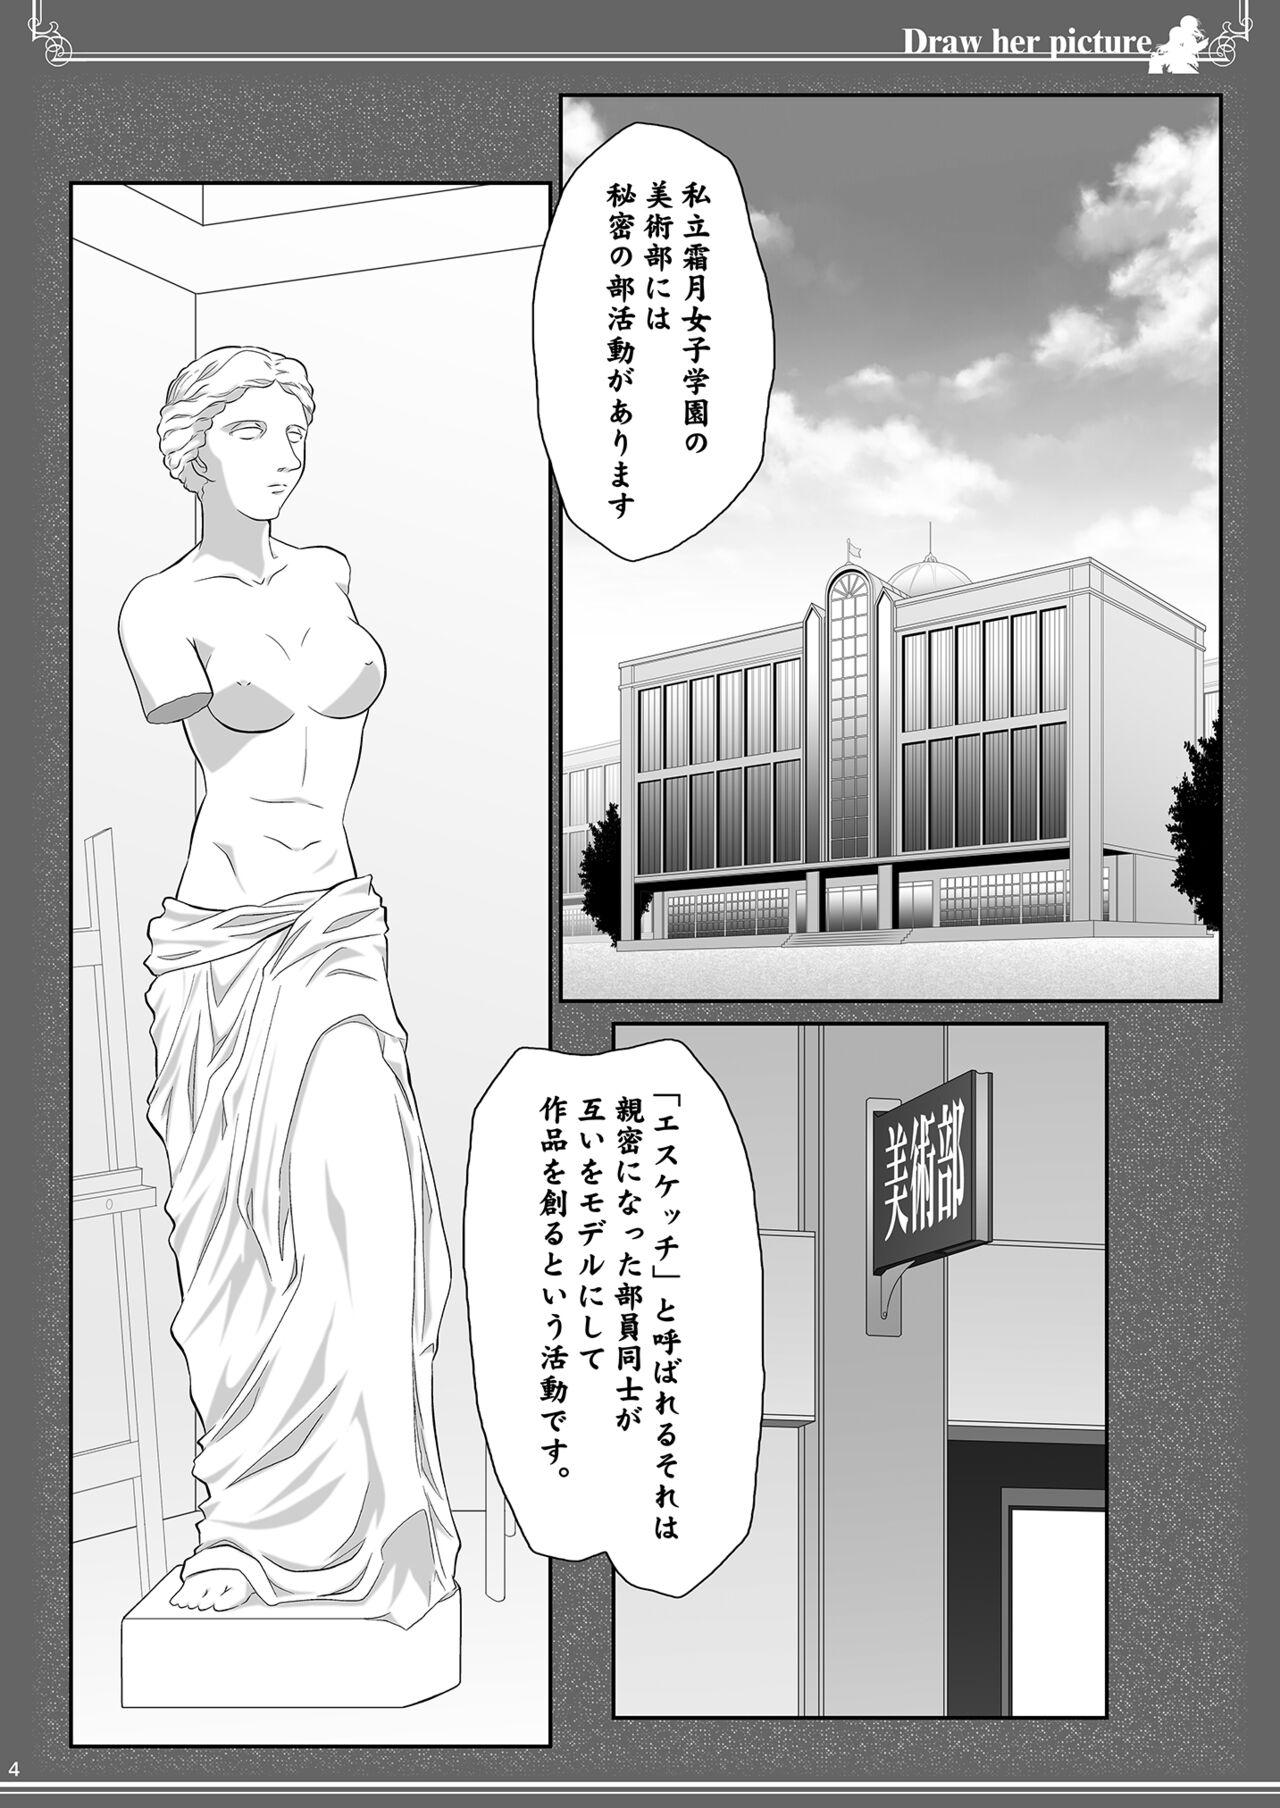 Lesbians 貴女を描く アユミとイクエのエスケッチ - Original Big Dicks - Page 4